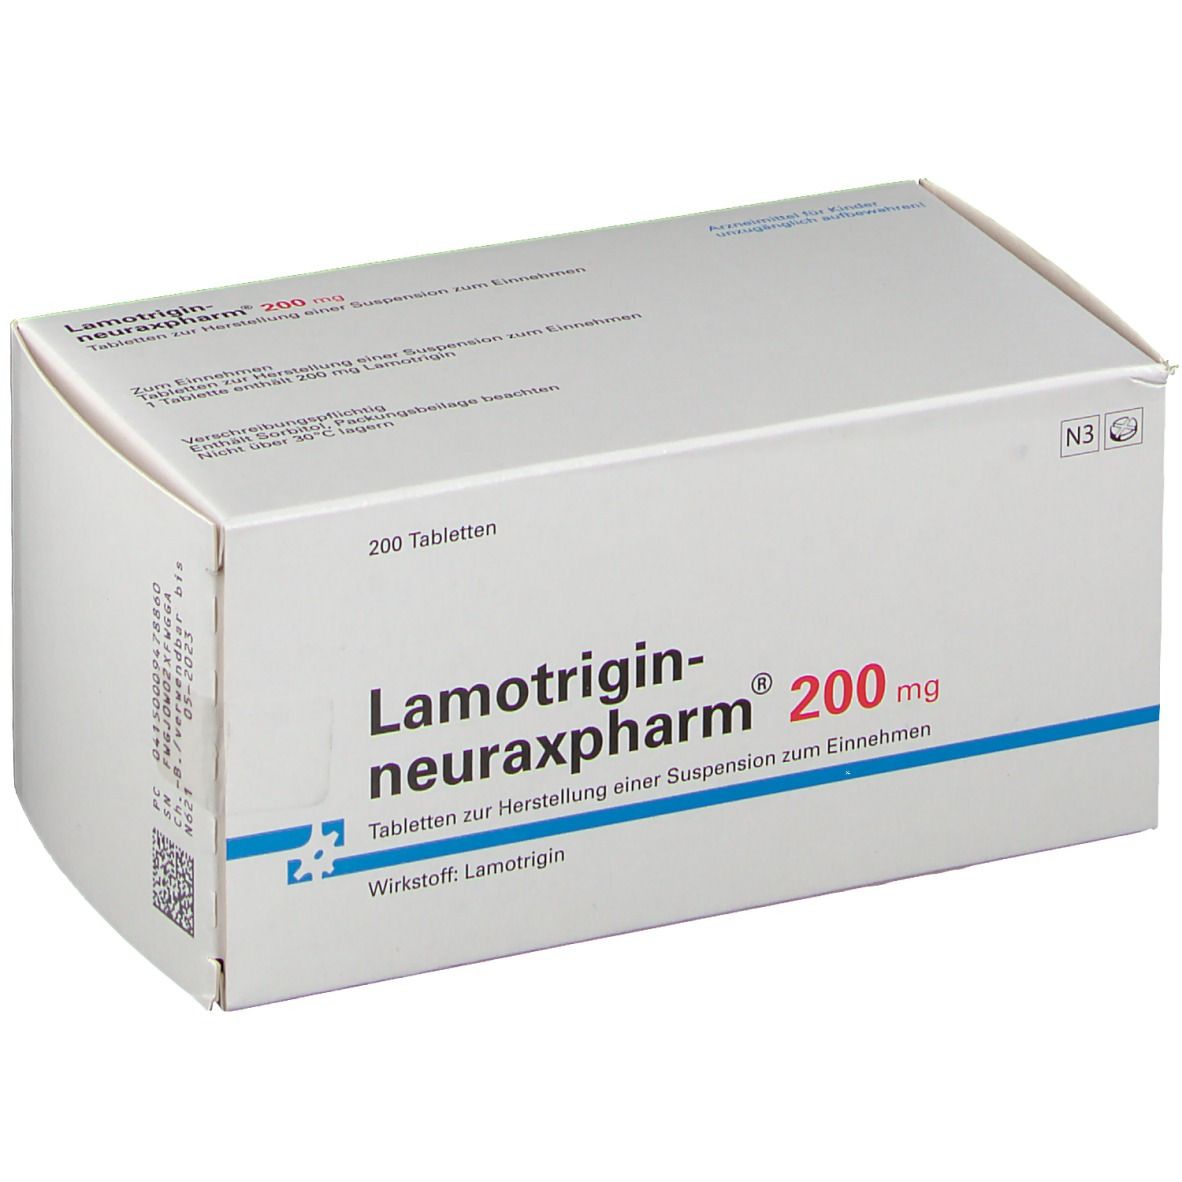 Lamotrigin-neuraxpharm® 200 mg